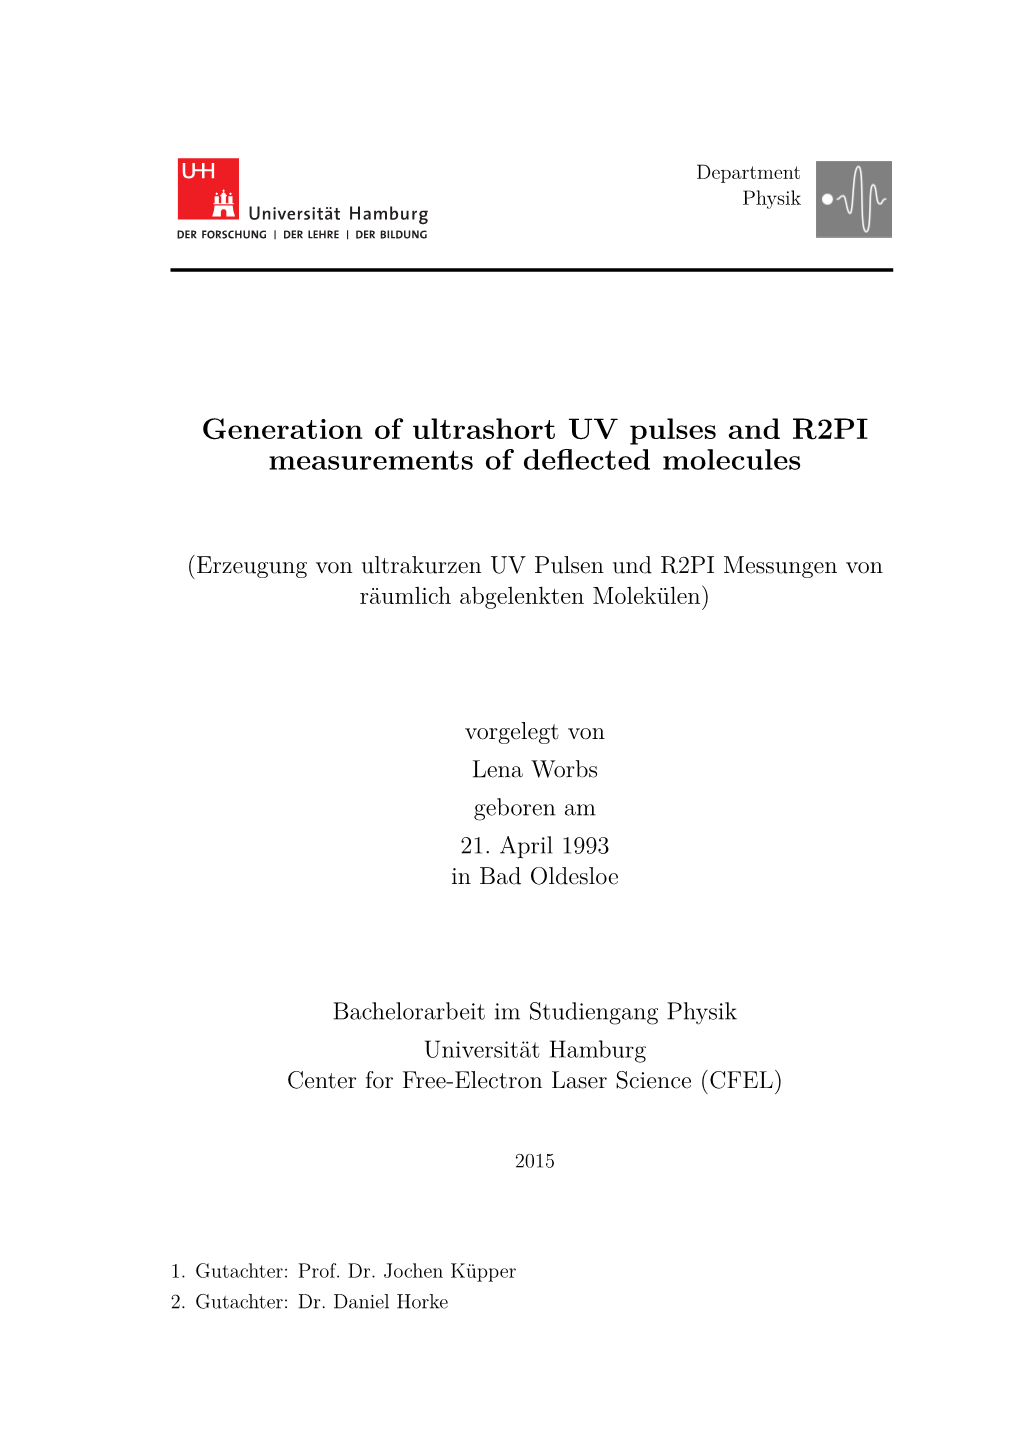 Generation of Ultrashort UV Pulses and R2PI Measurements of Deflected Molecules